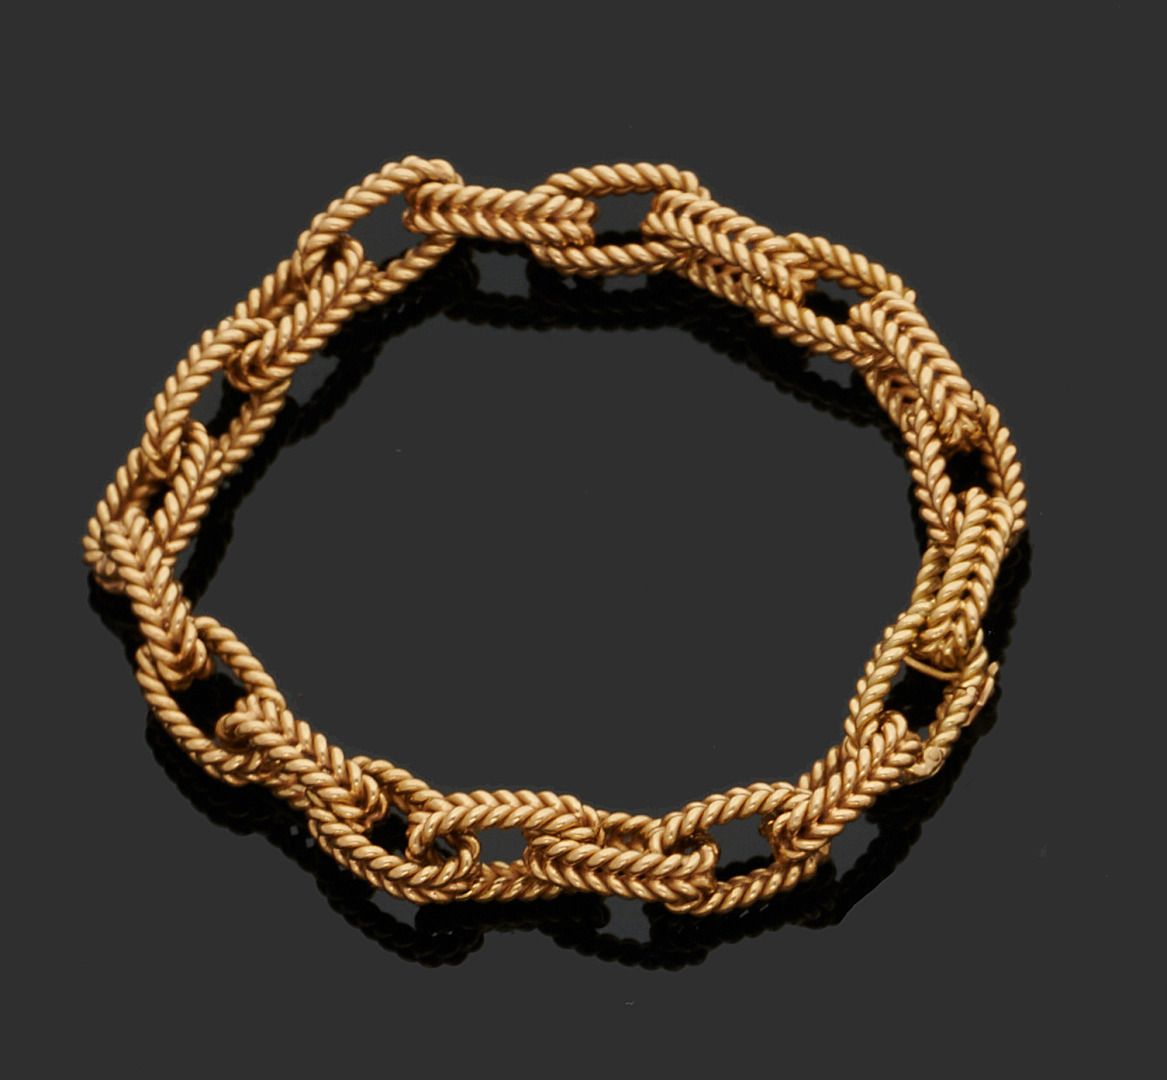 Null 黄金75万分之一的手镯，椭圆形的编织链接。
长度：22.5厘米左右
毛重 : 65,7 g